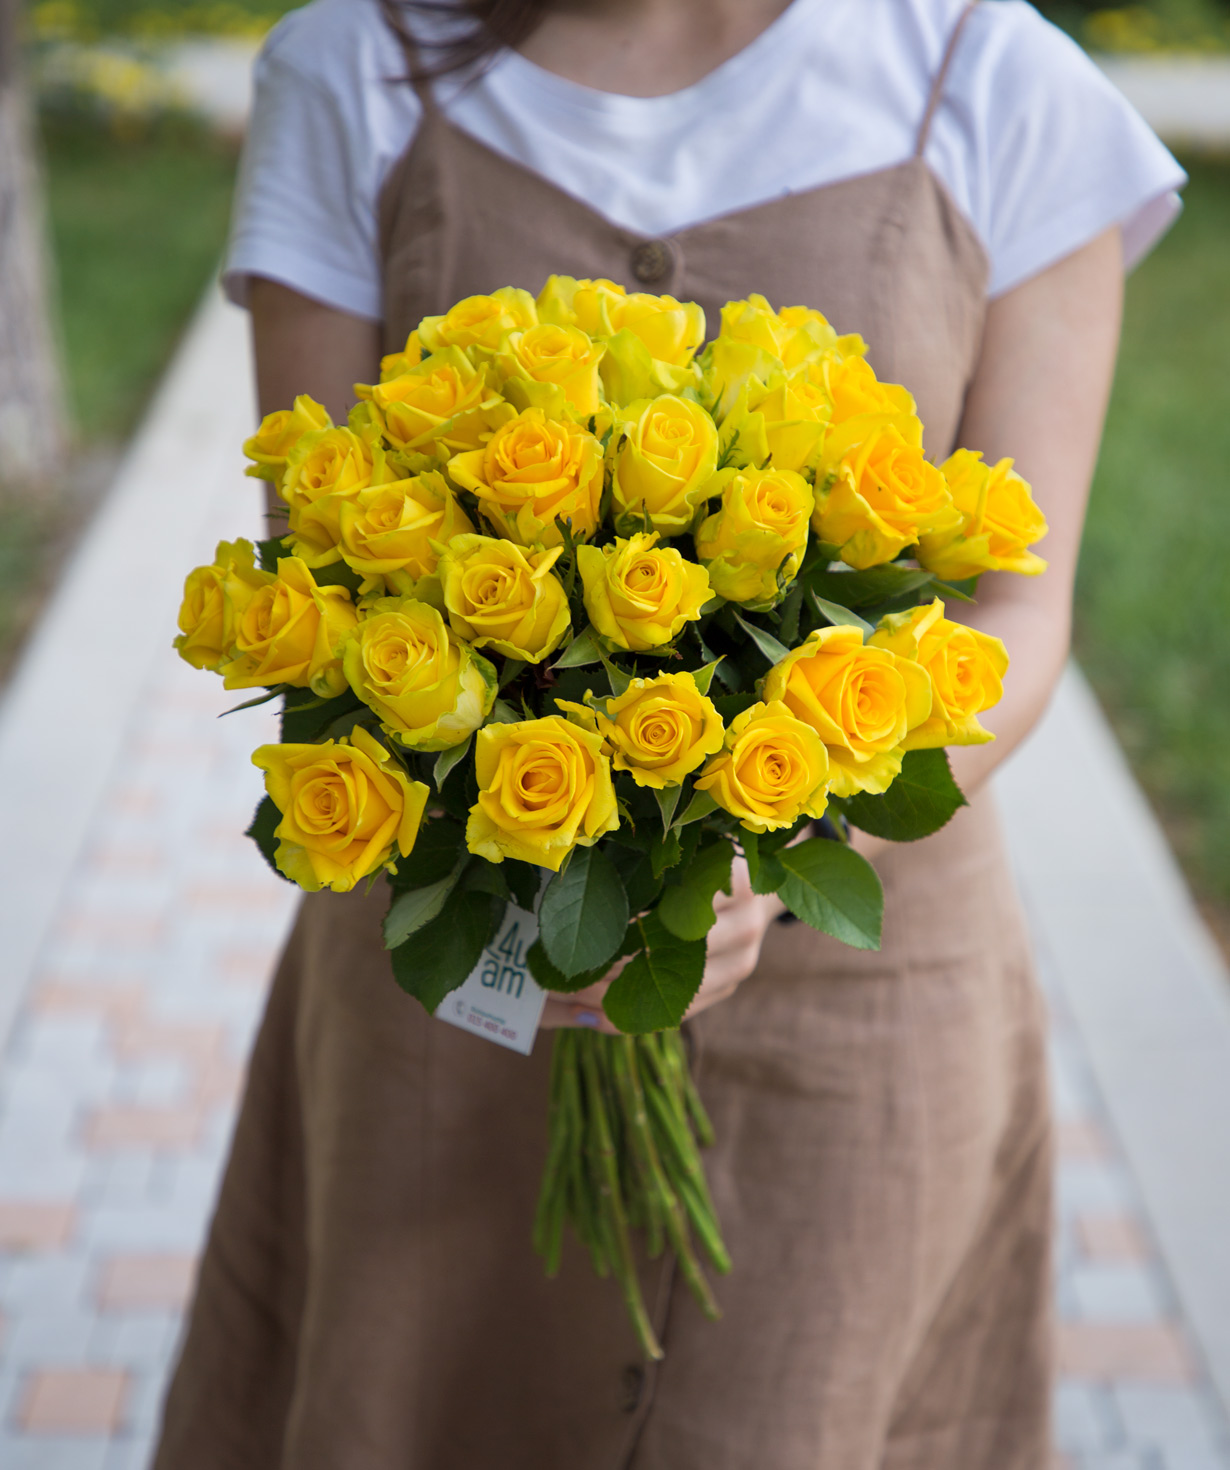 Gyumri roses «Penny Lane» yellow 31 pcs, 50 cm